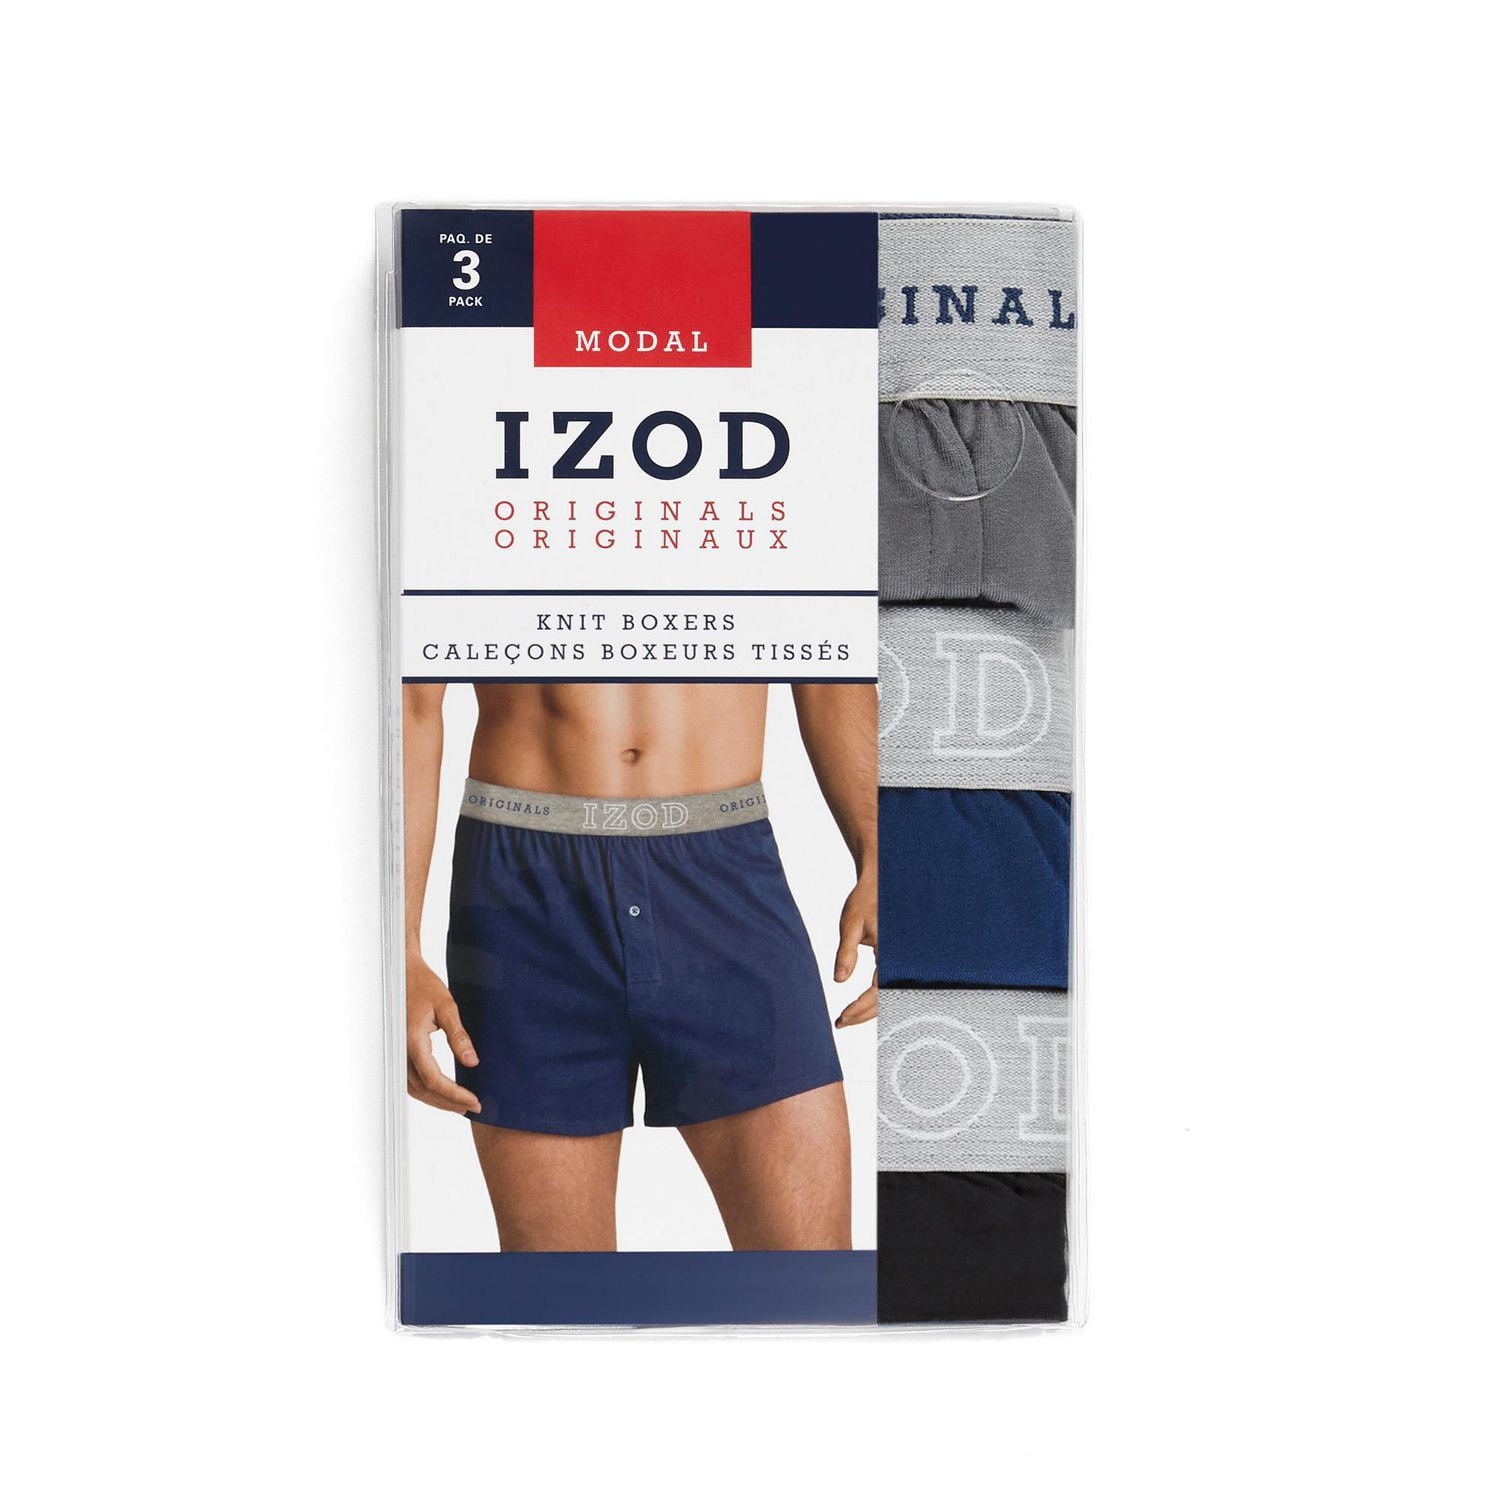 IZOD ORIGINALS 3 Pack Knit Boxers, Size S-XL 